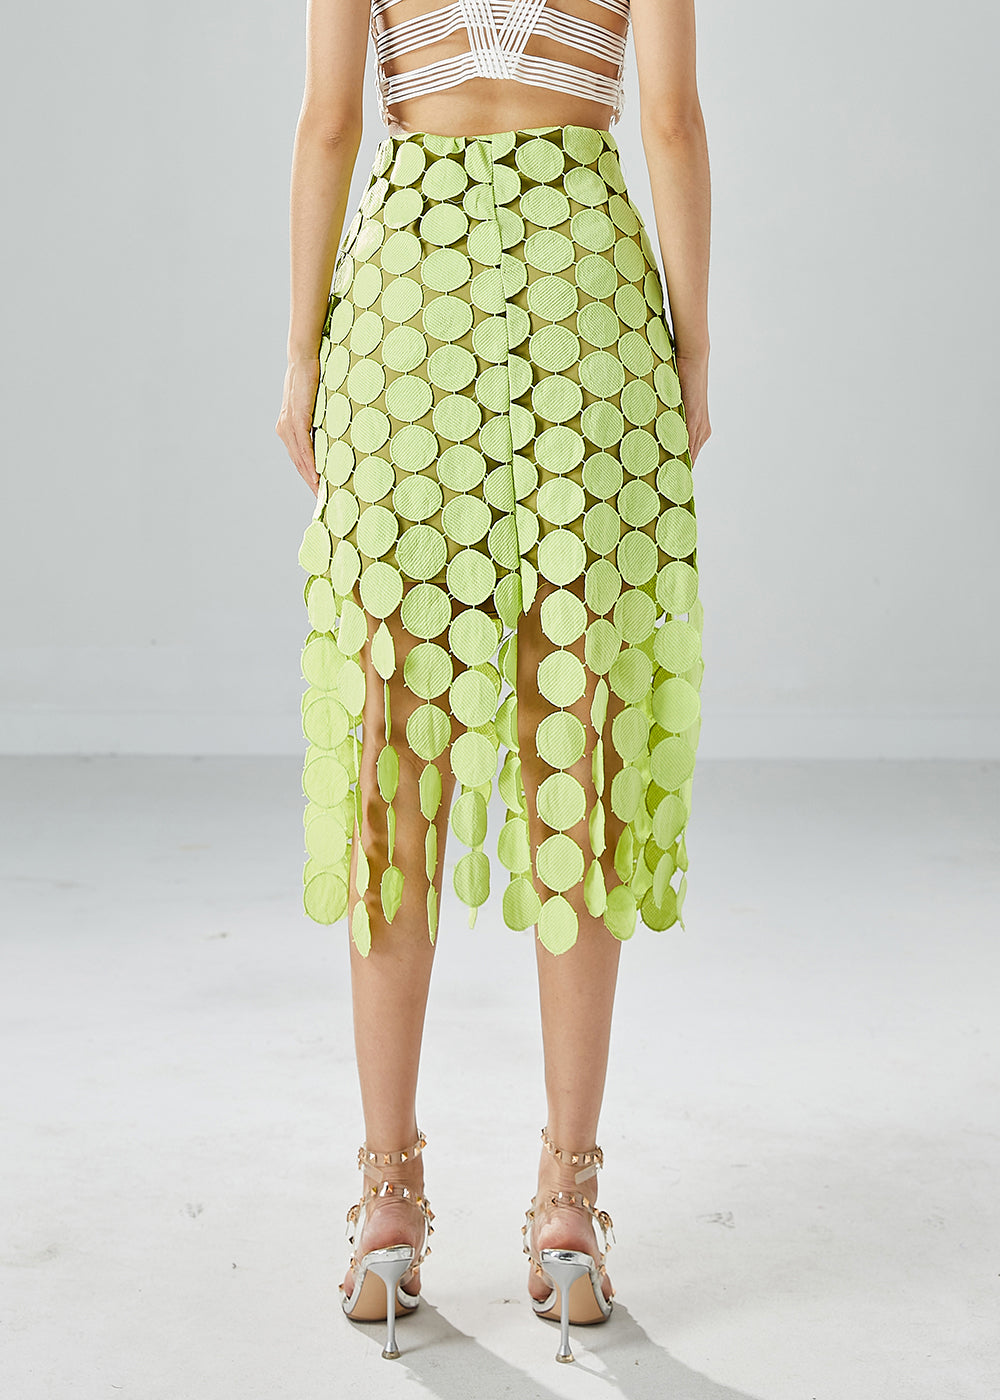 Original Design Grass Green Embroideried Circle Slim Fit Skirts Summer